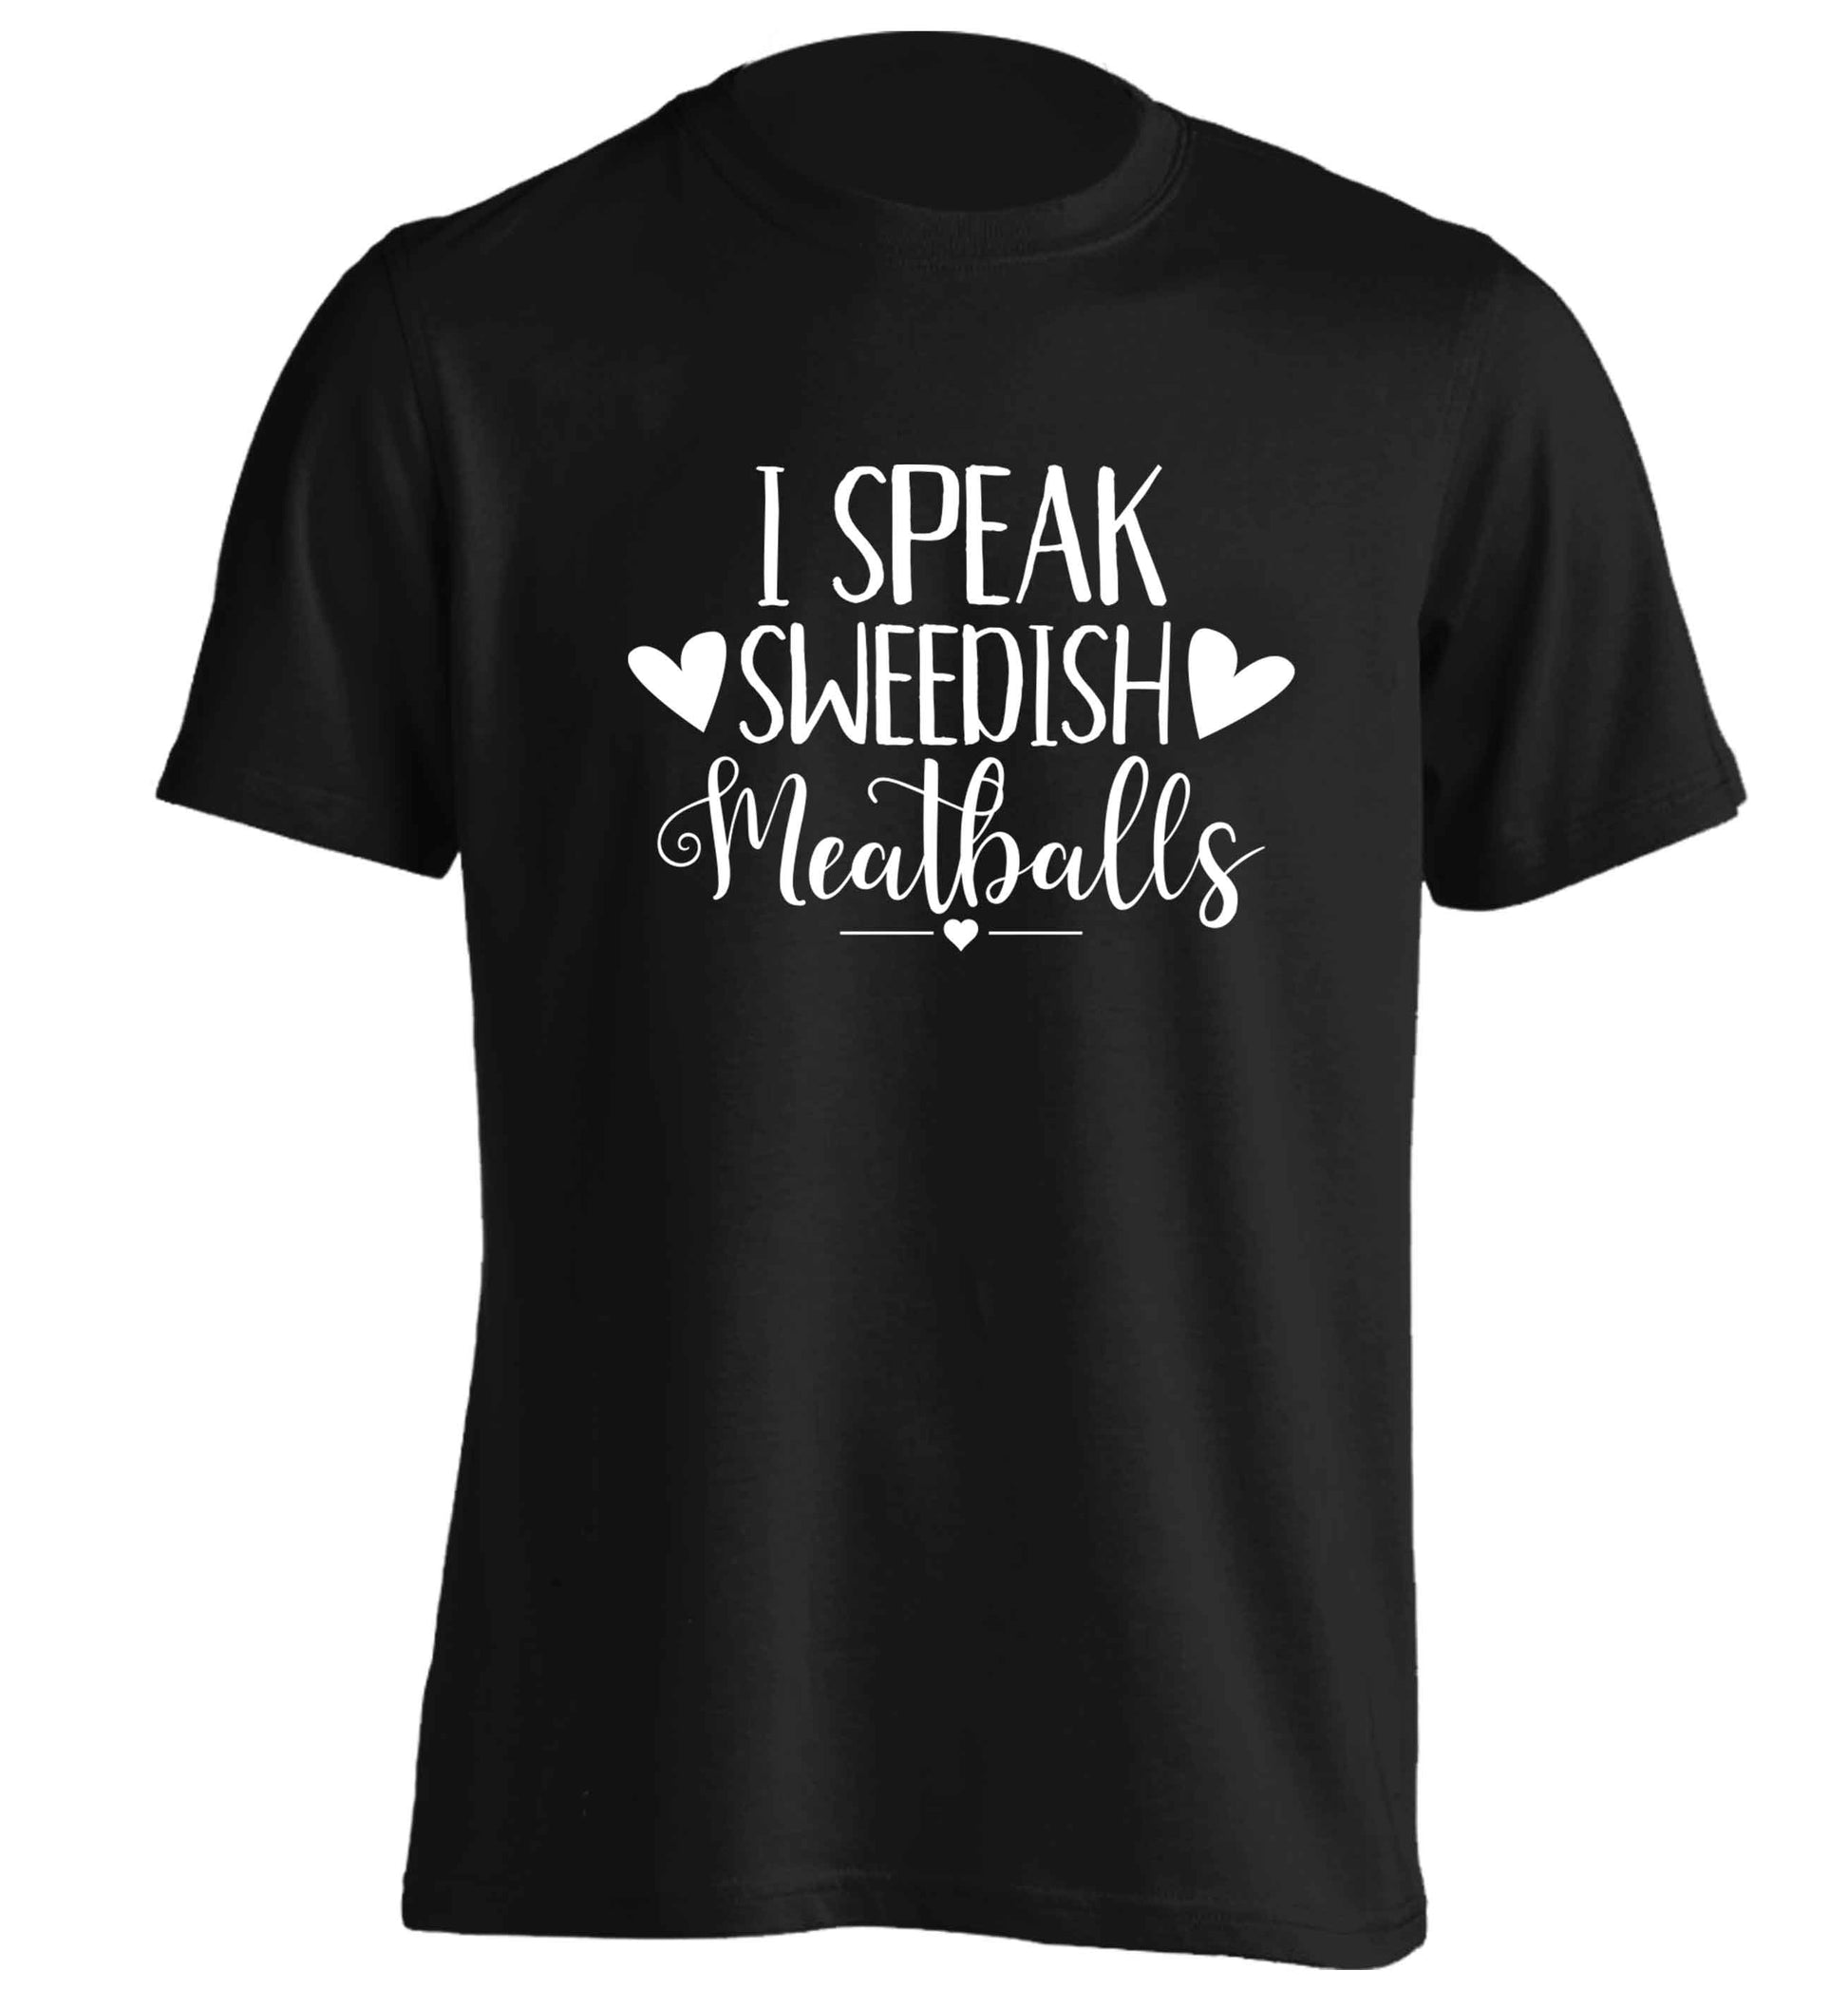 I speak sweedish...meatballs adults unisex black Tshirt 2XL